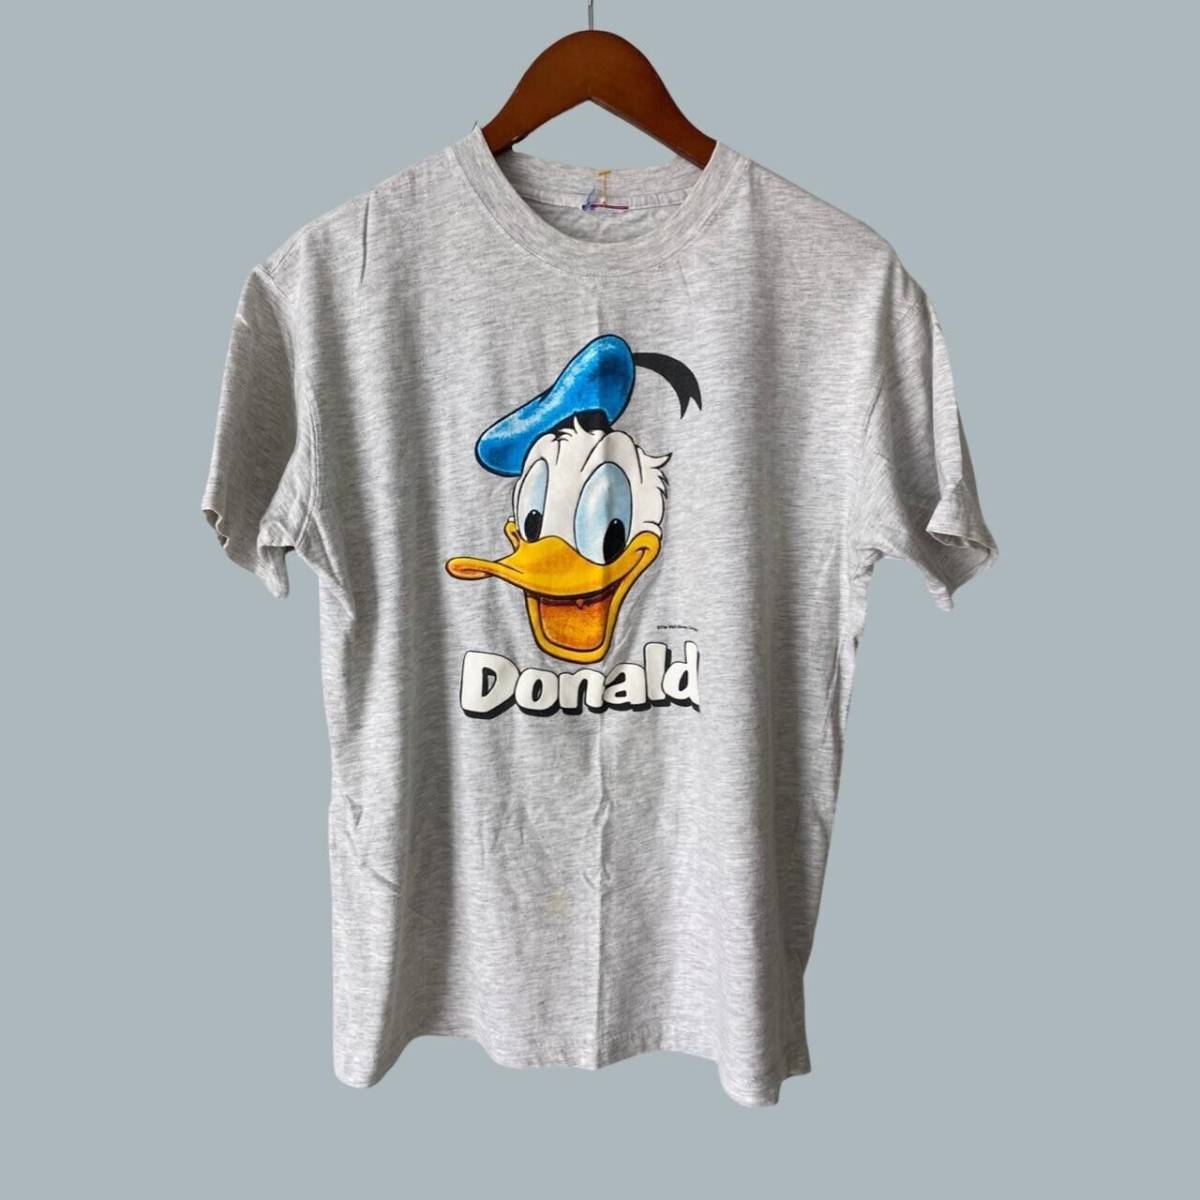 Vintage Disney Donald Duck tee about a size medium 海外 即決